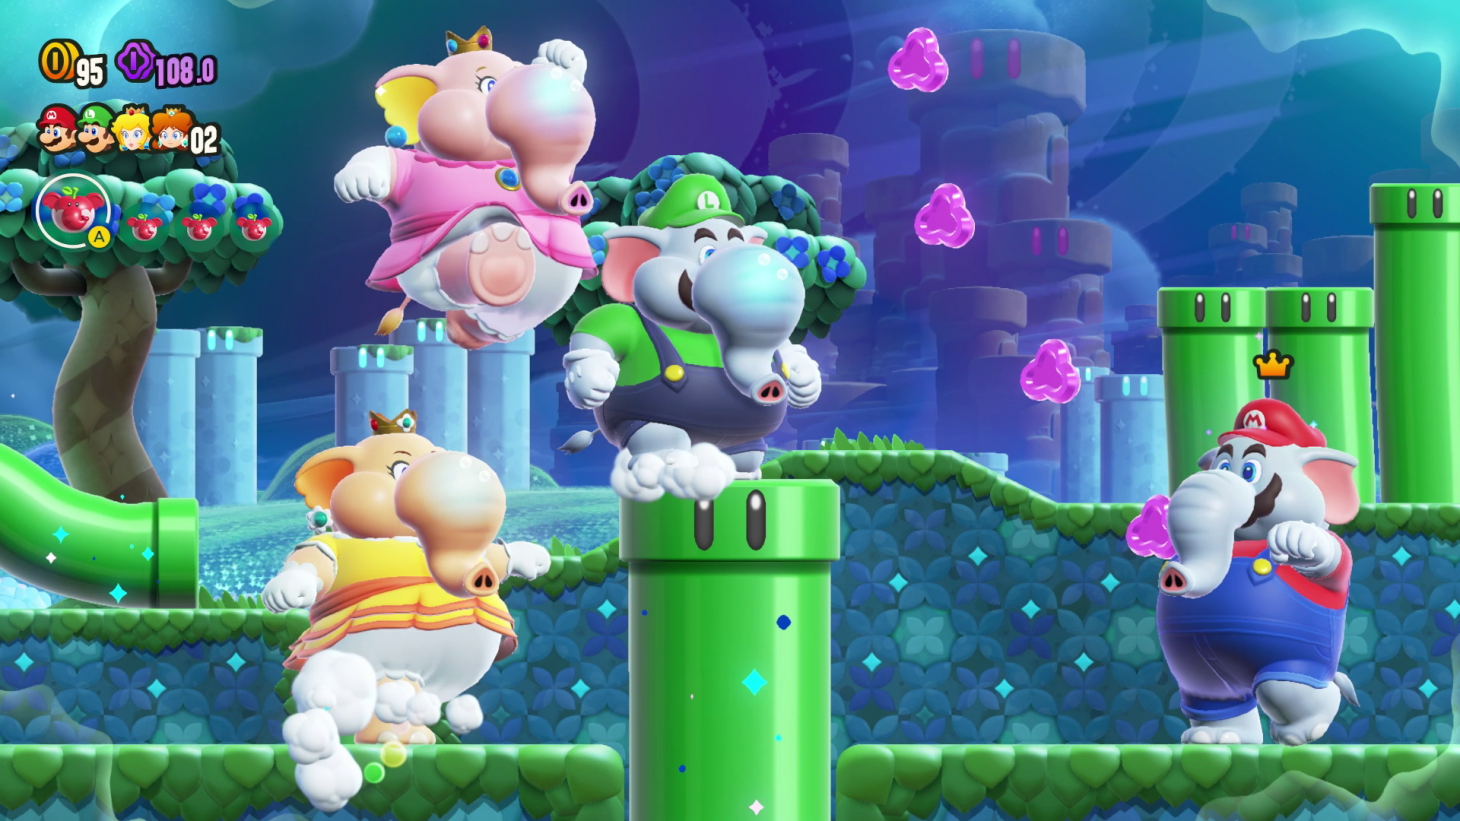 Super Mario Bros. Wonder features new power-ups, badges & Yoshi riding  Yoshi